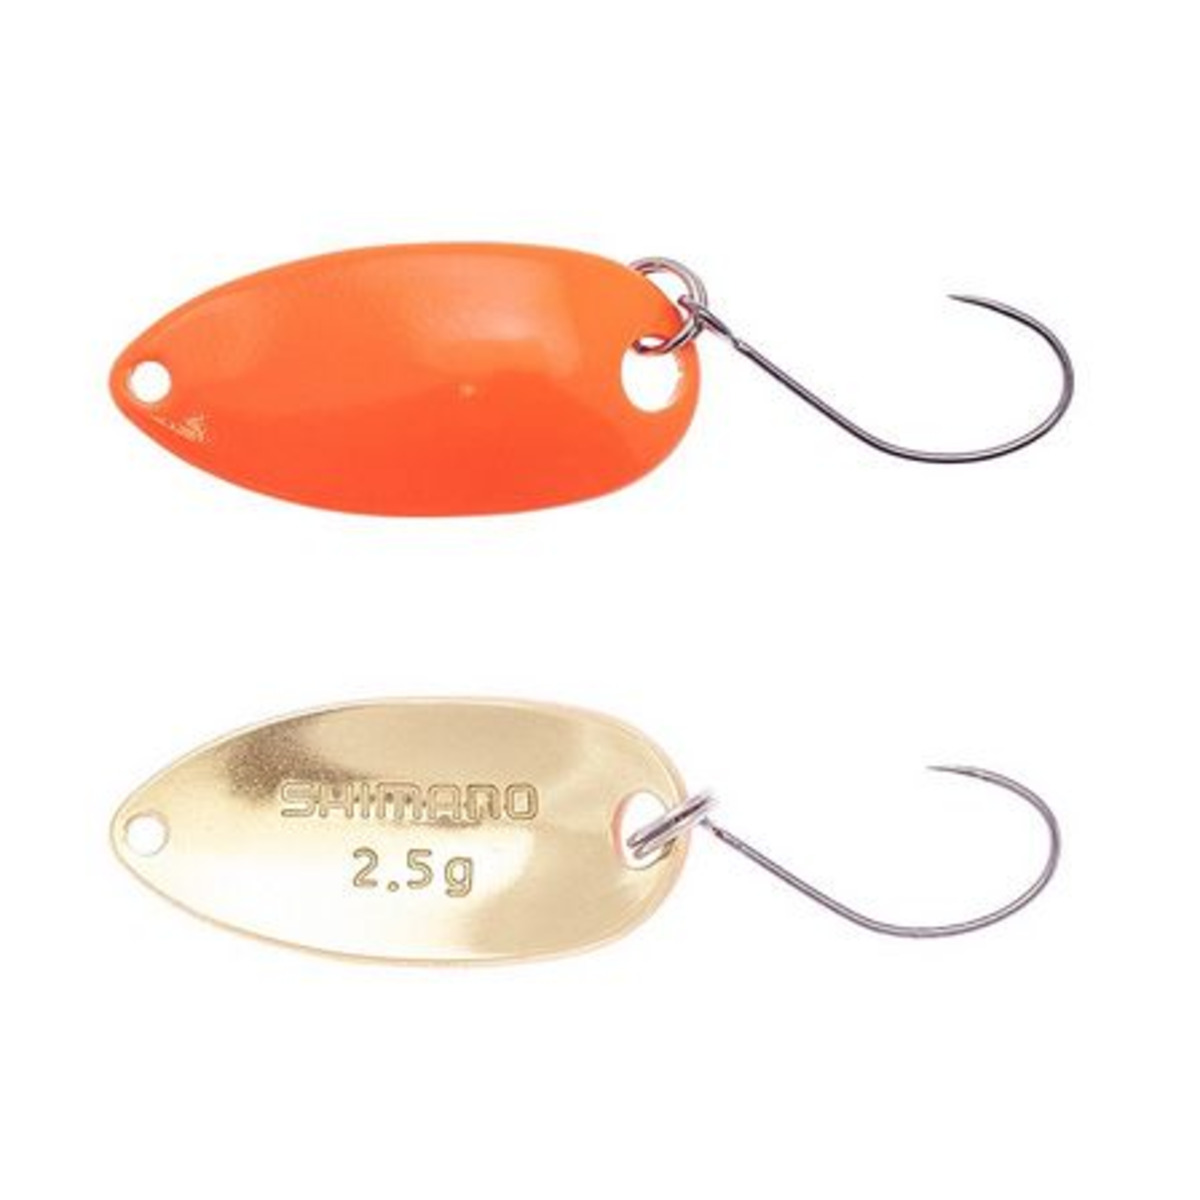 Shimano Cardiff Roll Swimmer - 1.8 g - Orange Gold